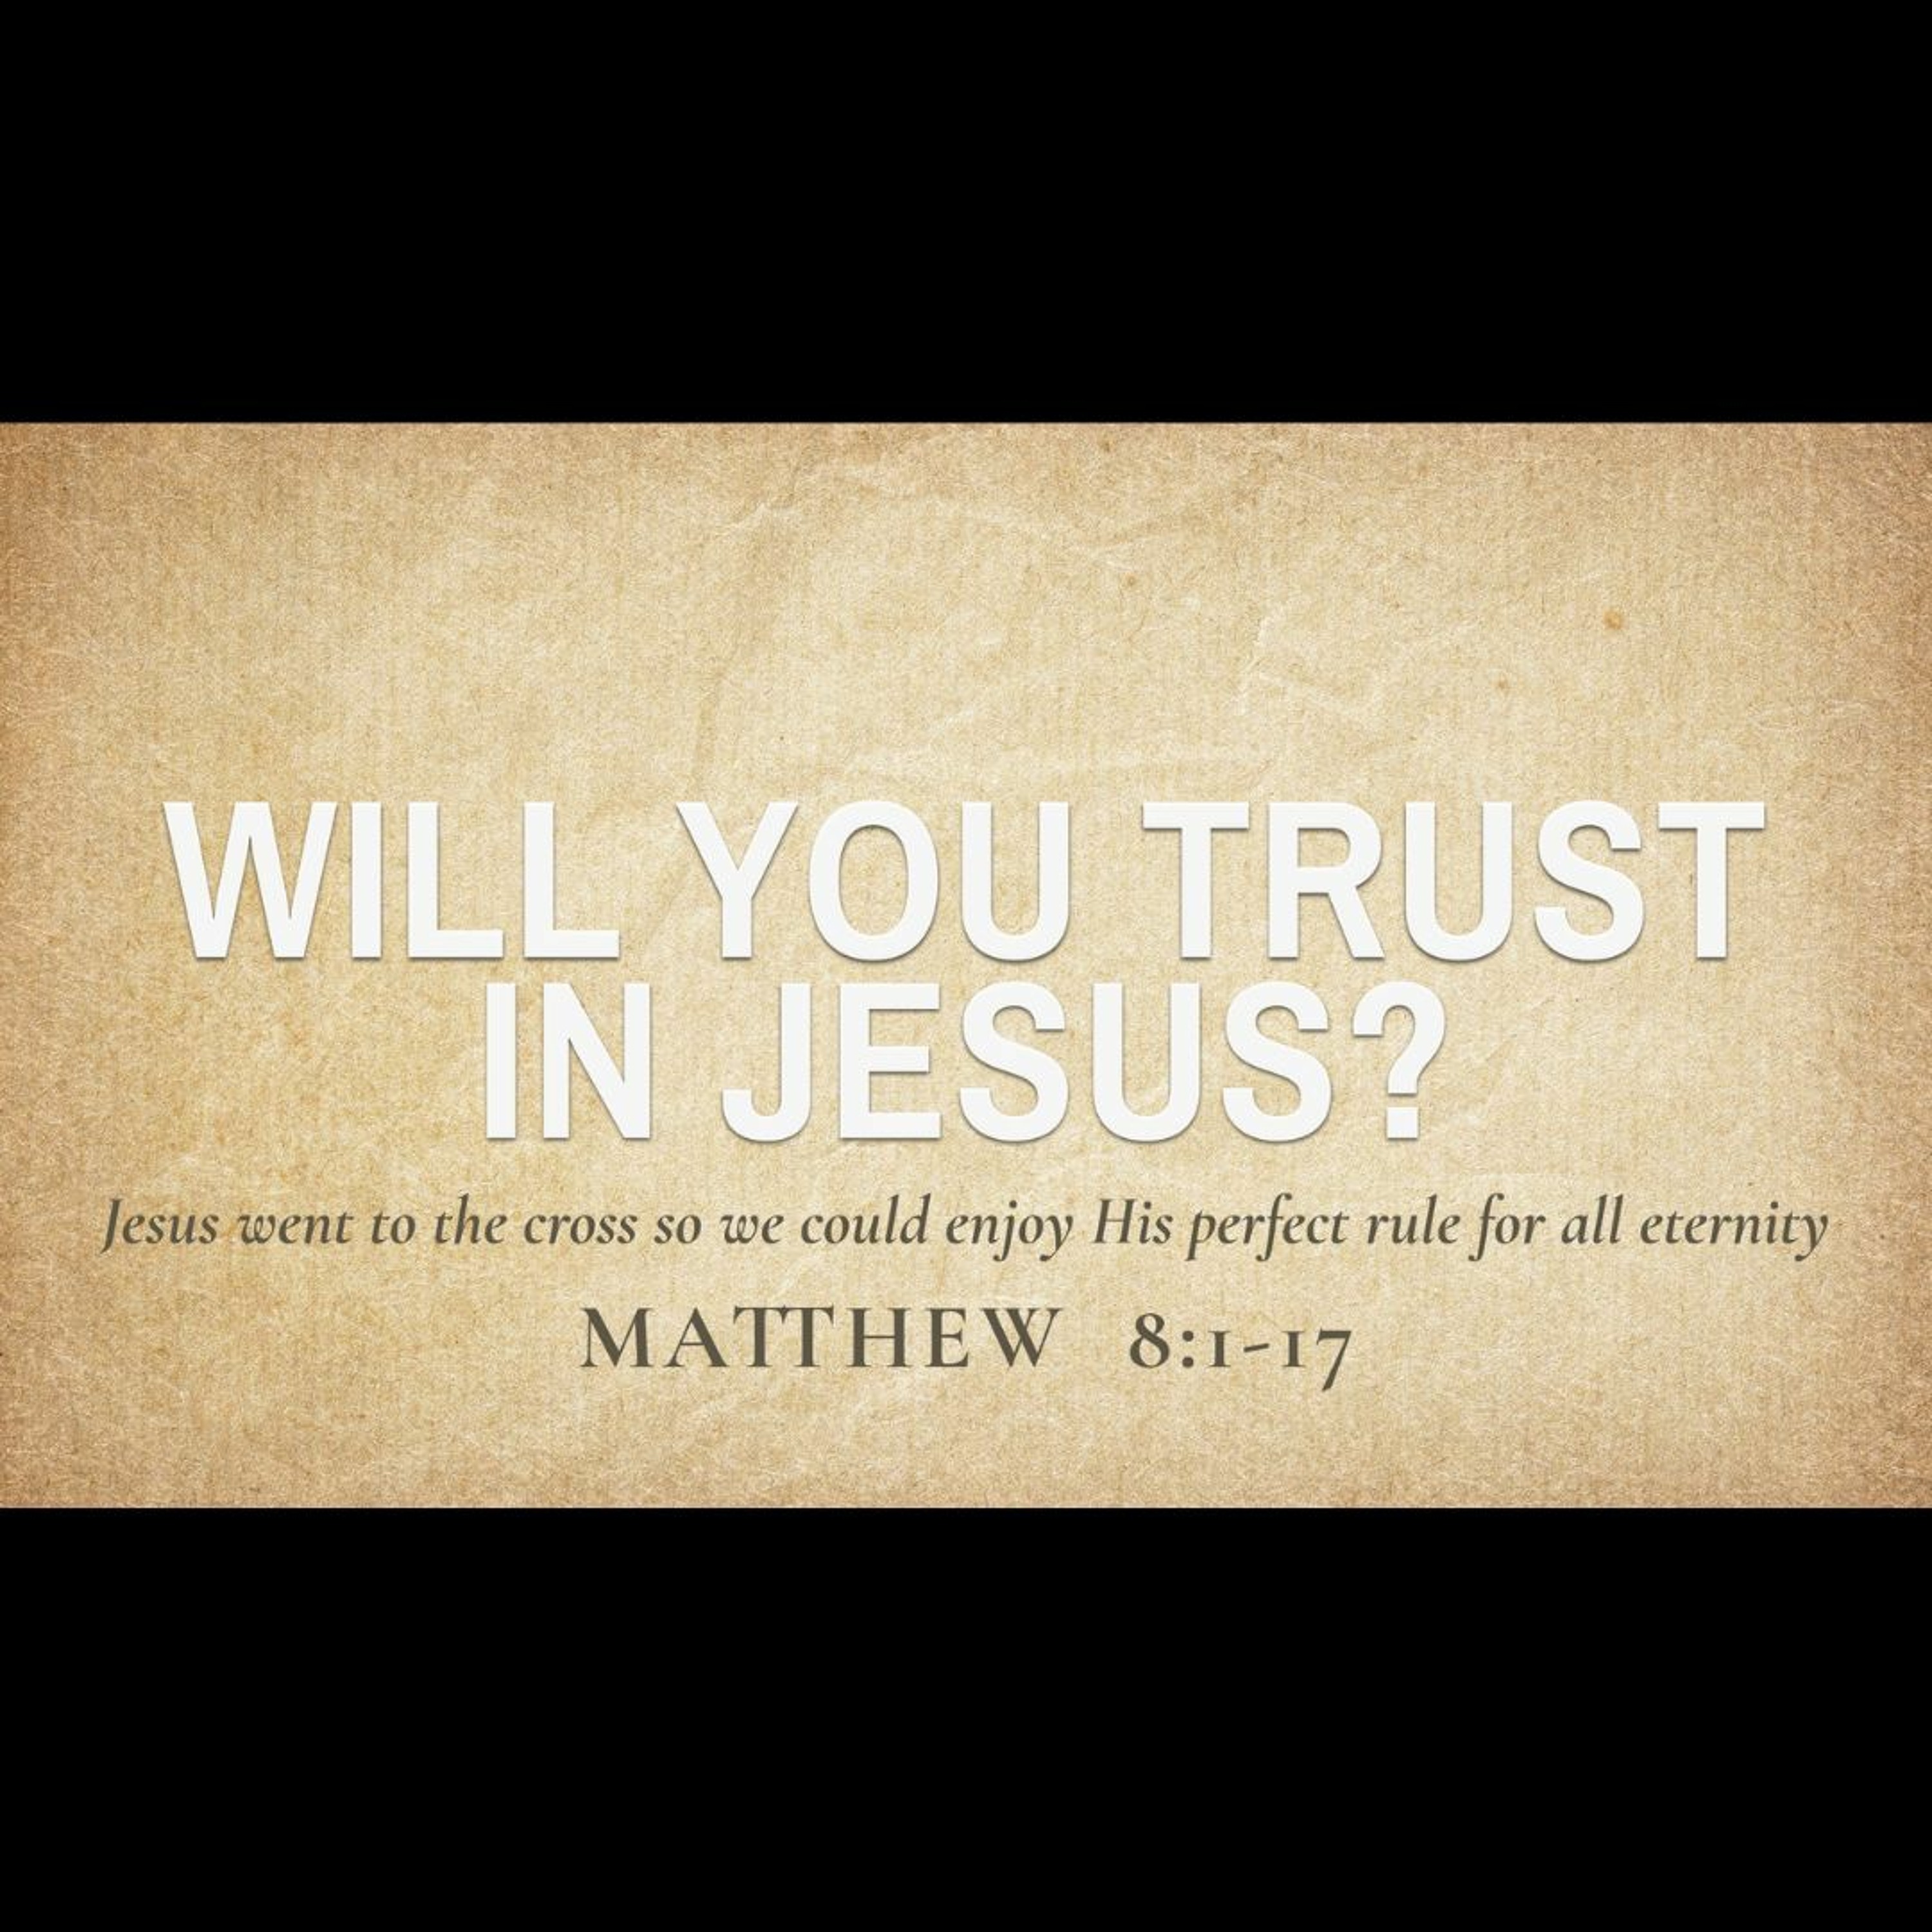 Will You Trust in Jesus? (Matthew 8:1-17)